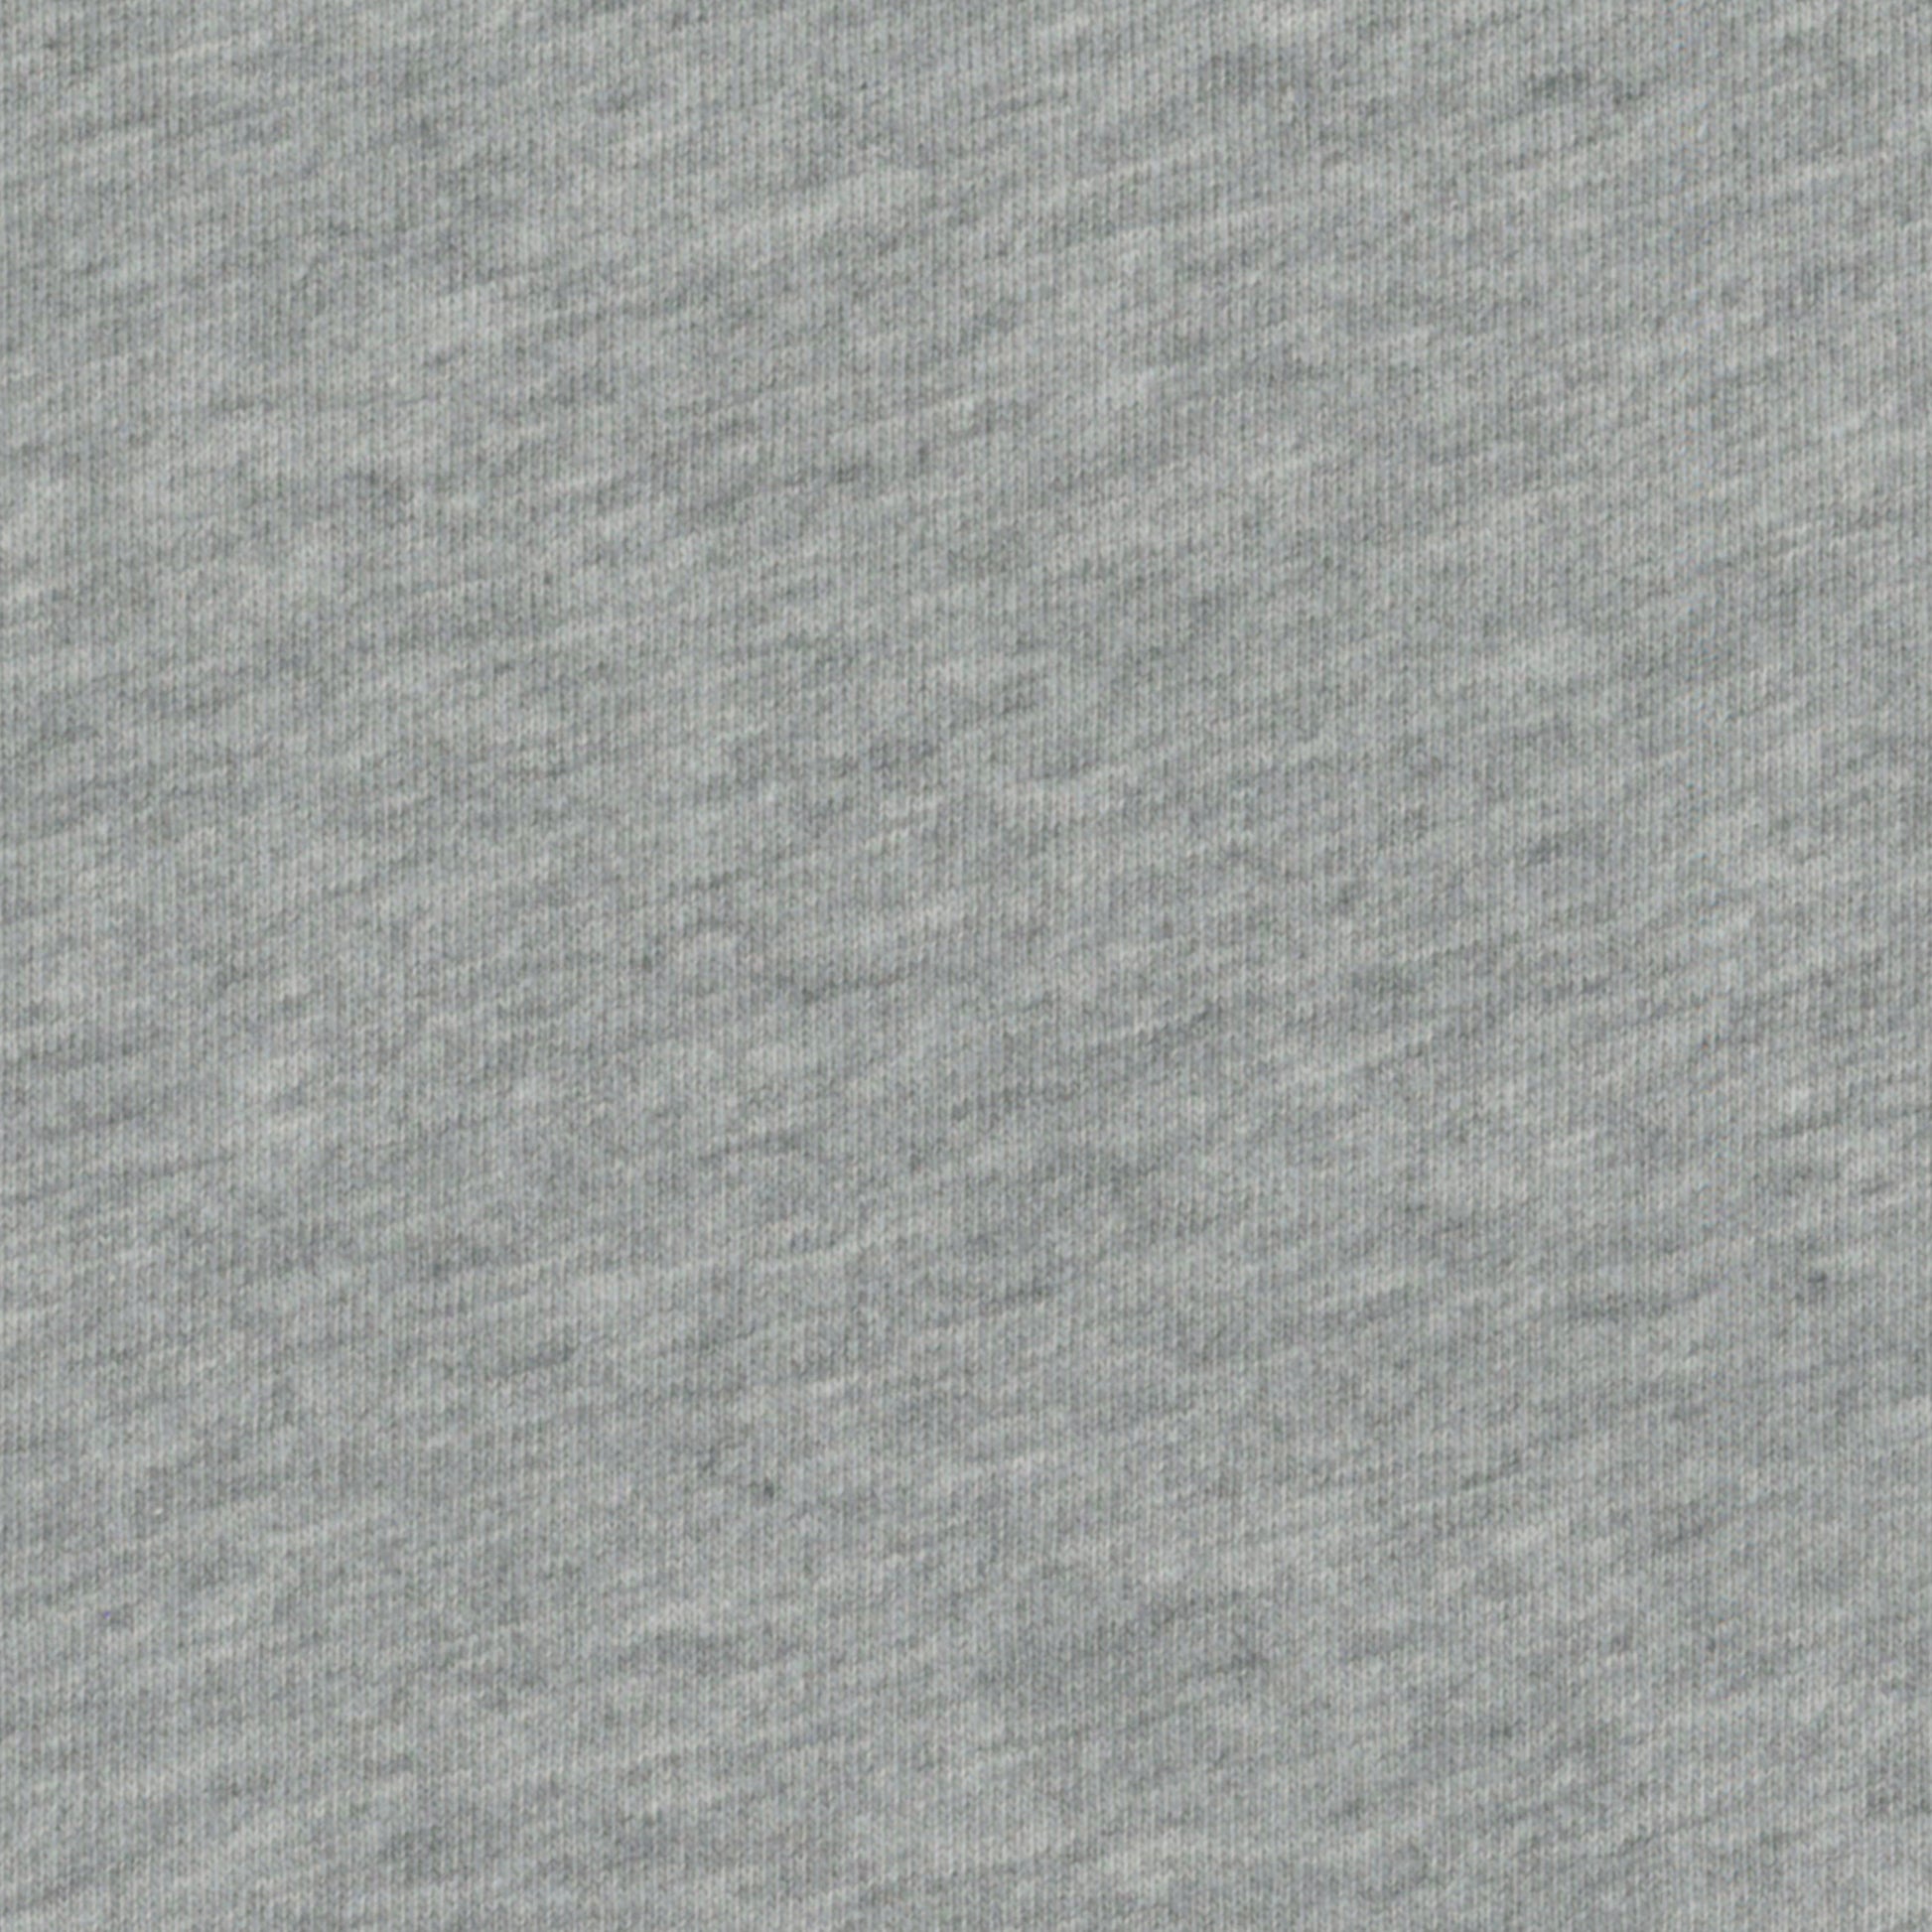 100% Organic Cotton Single Jersey- Grey Melange (2SP029)